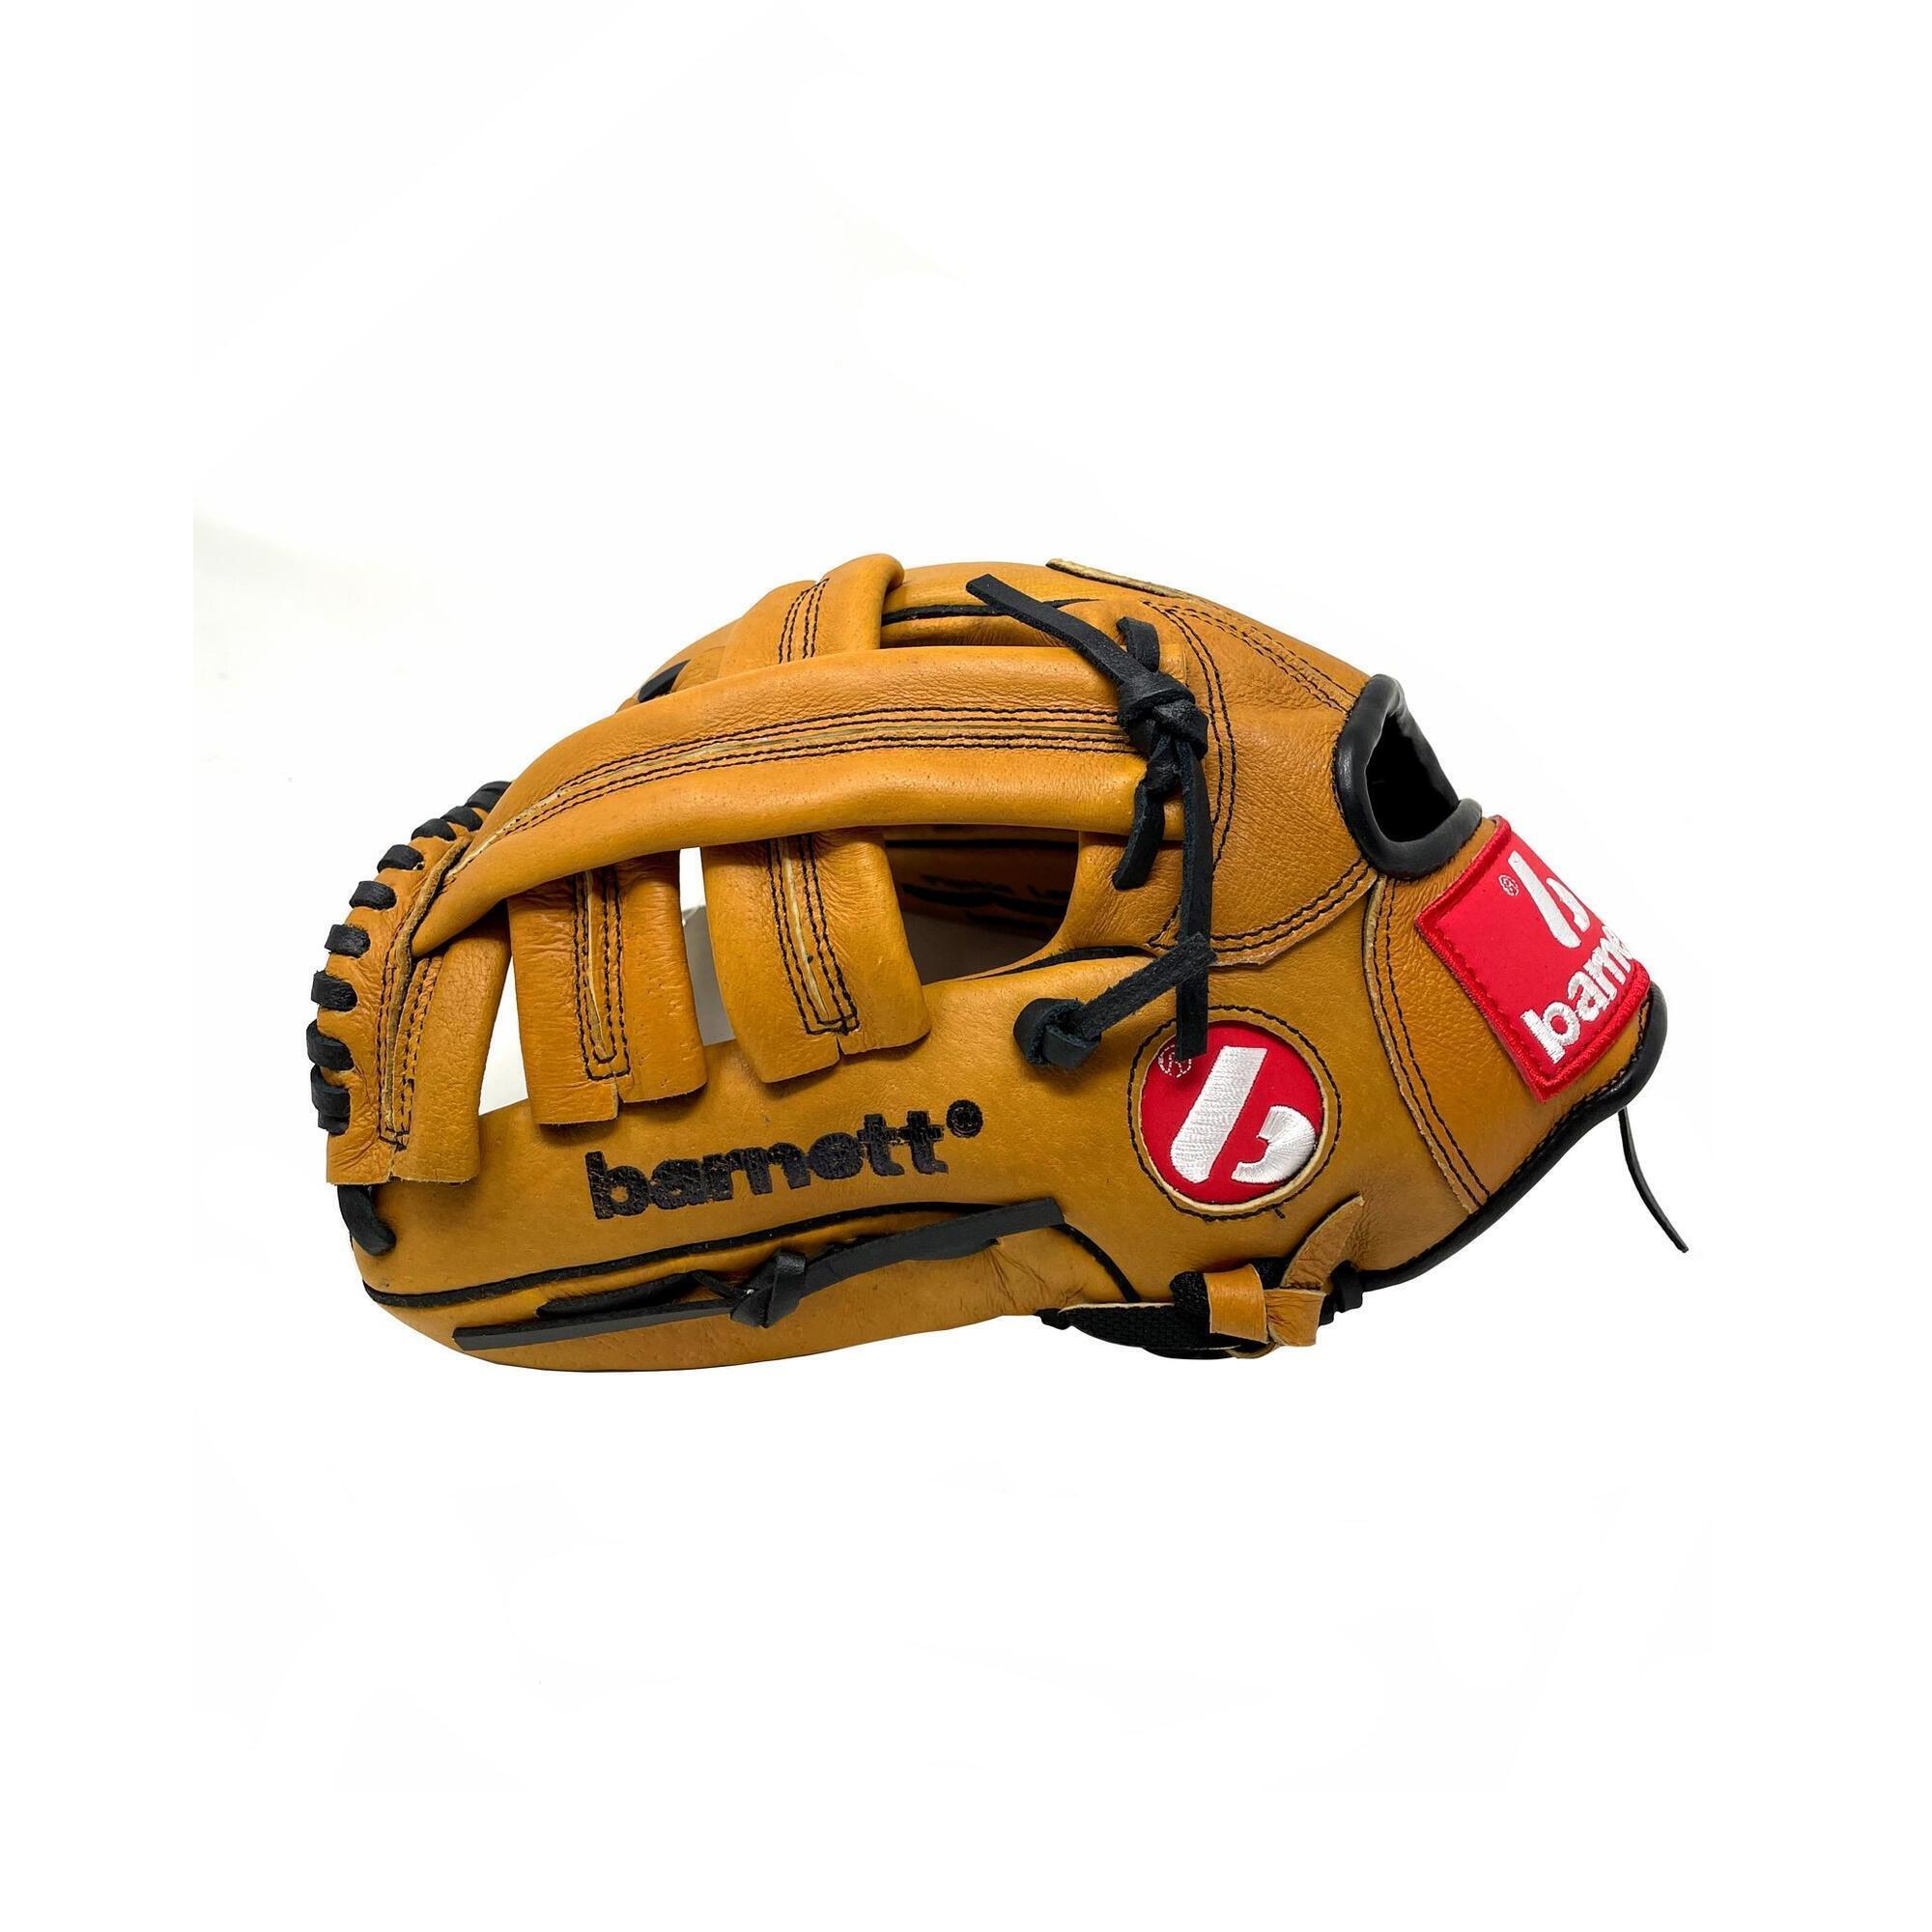 BARNETT  leather baseball glove RH SL-130